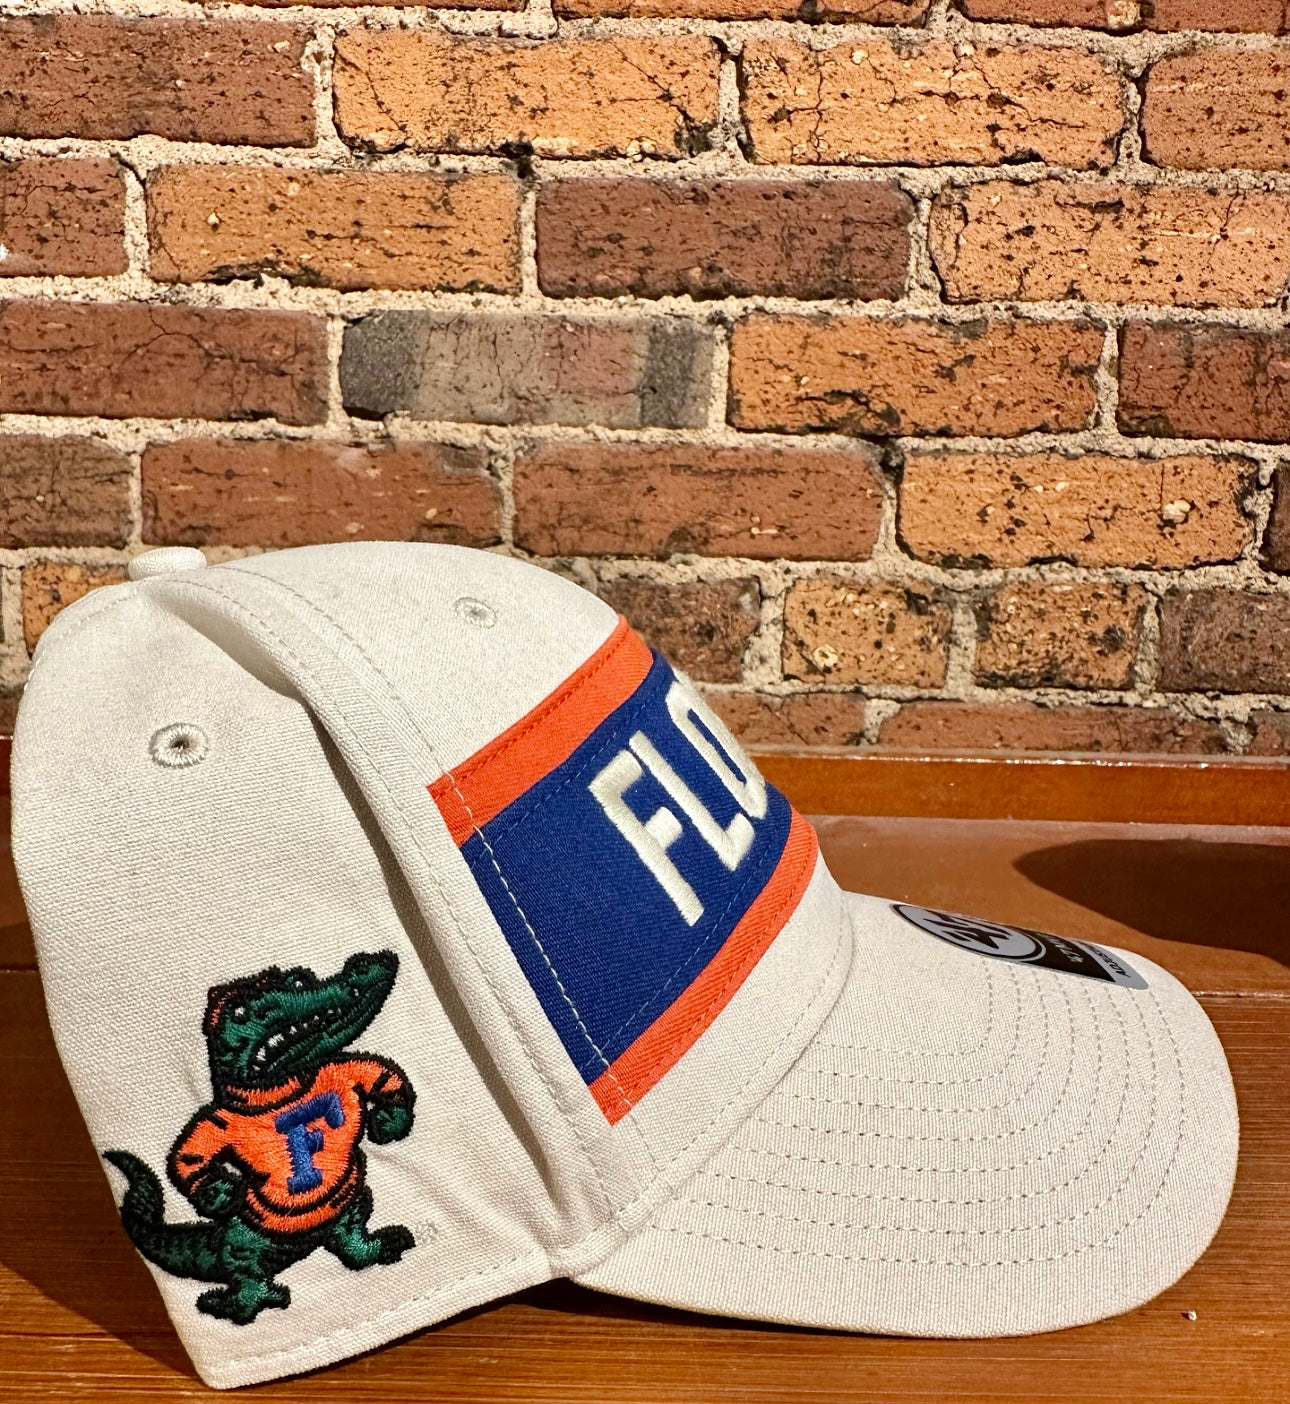 Florida Gators MVP Clean Up Hat - 47 Brand